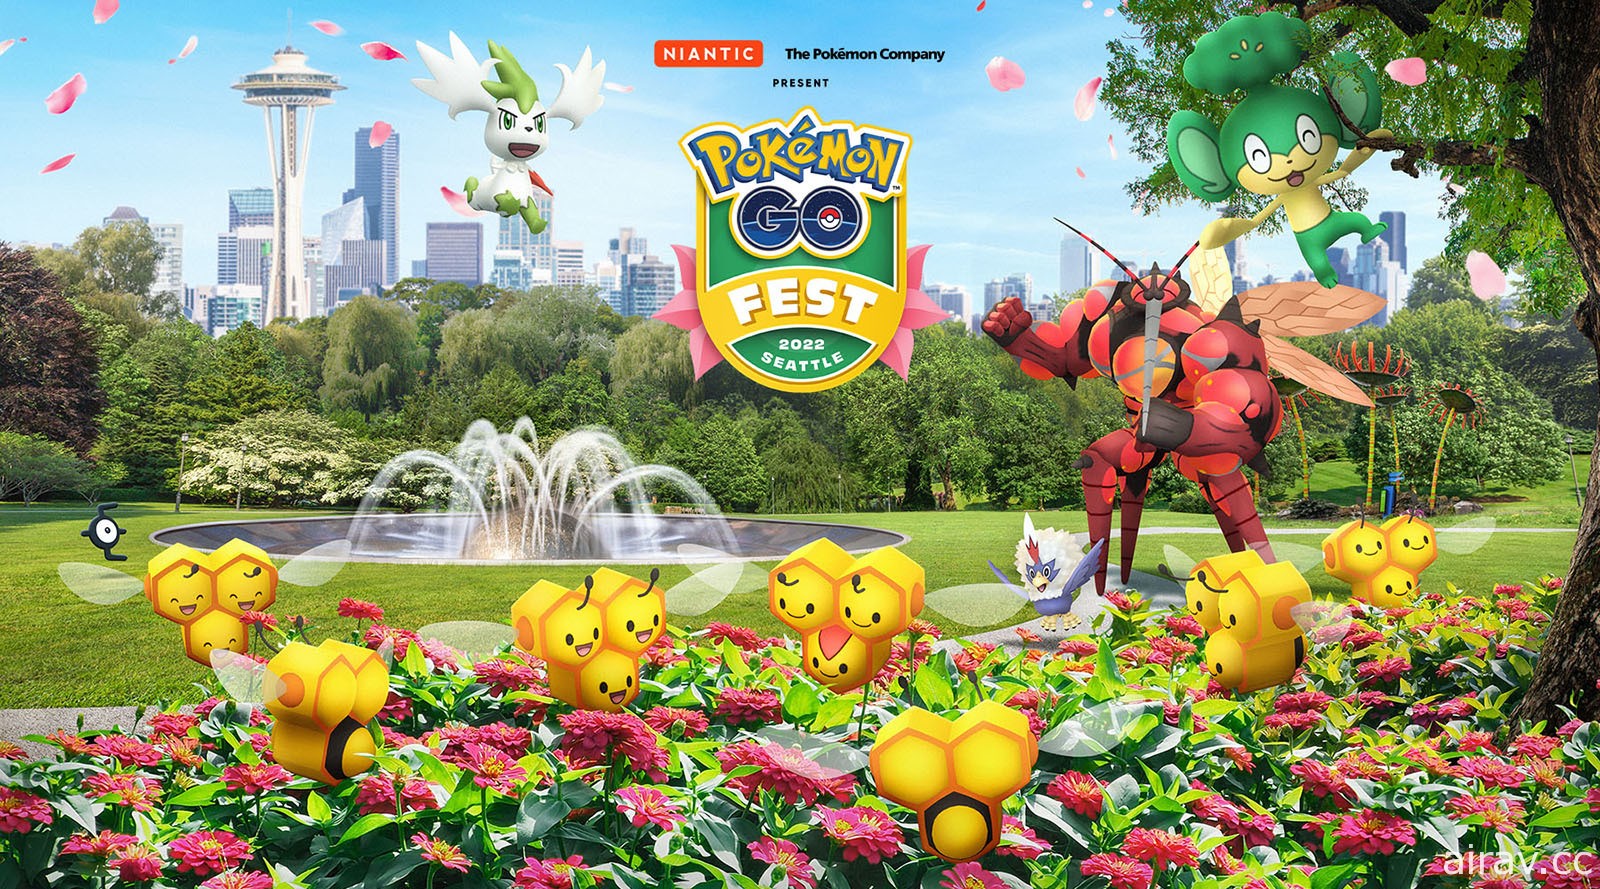 Niantic 社群日于本周六登场 同步公开 Pokémon GO Fest 2022 海外现场活动的究极异兽